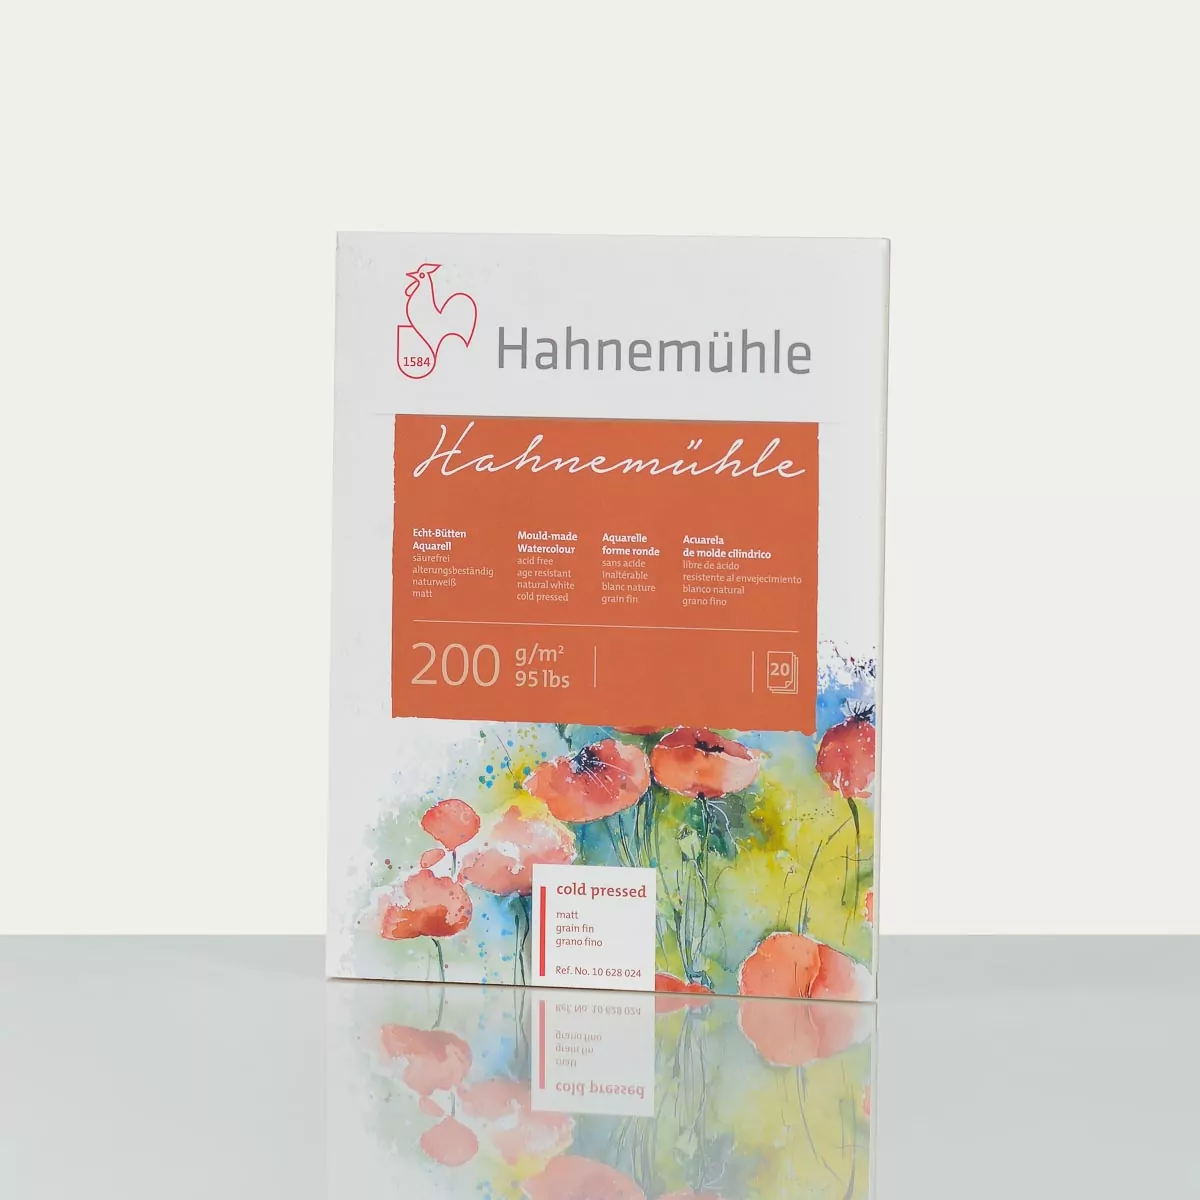 Traditional Hahnemuhle WatercolourBlock “Hahnemuhle” matt 200gsm 12x17cm (20 Sheets)